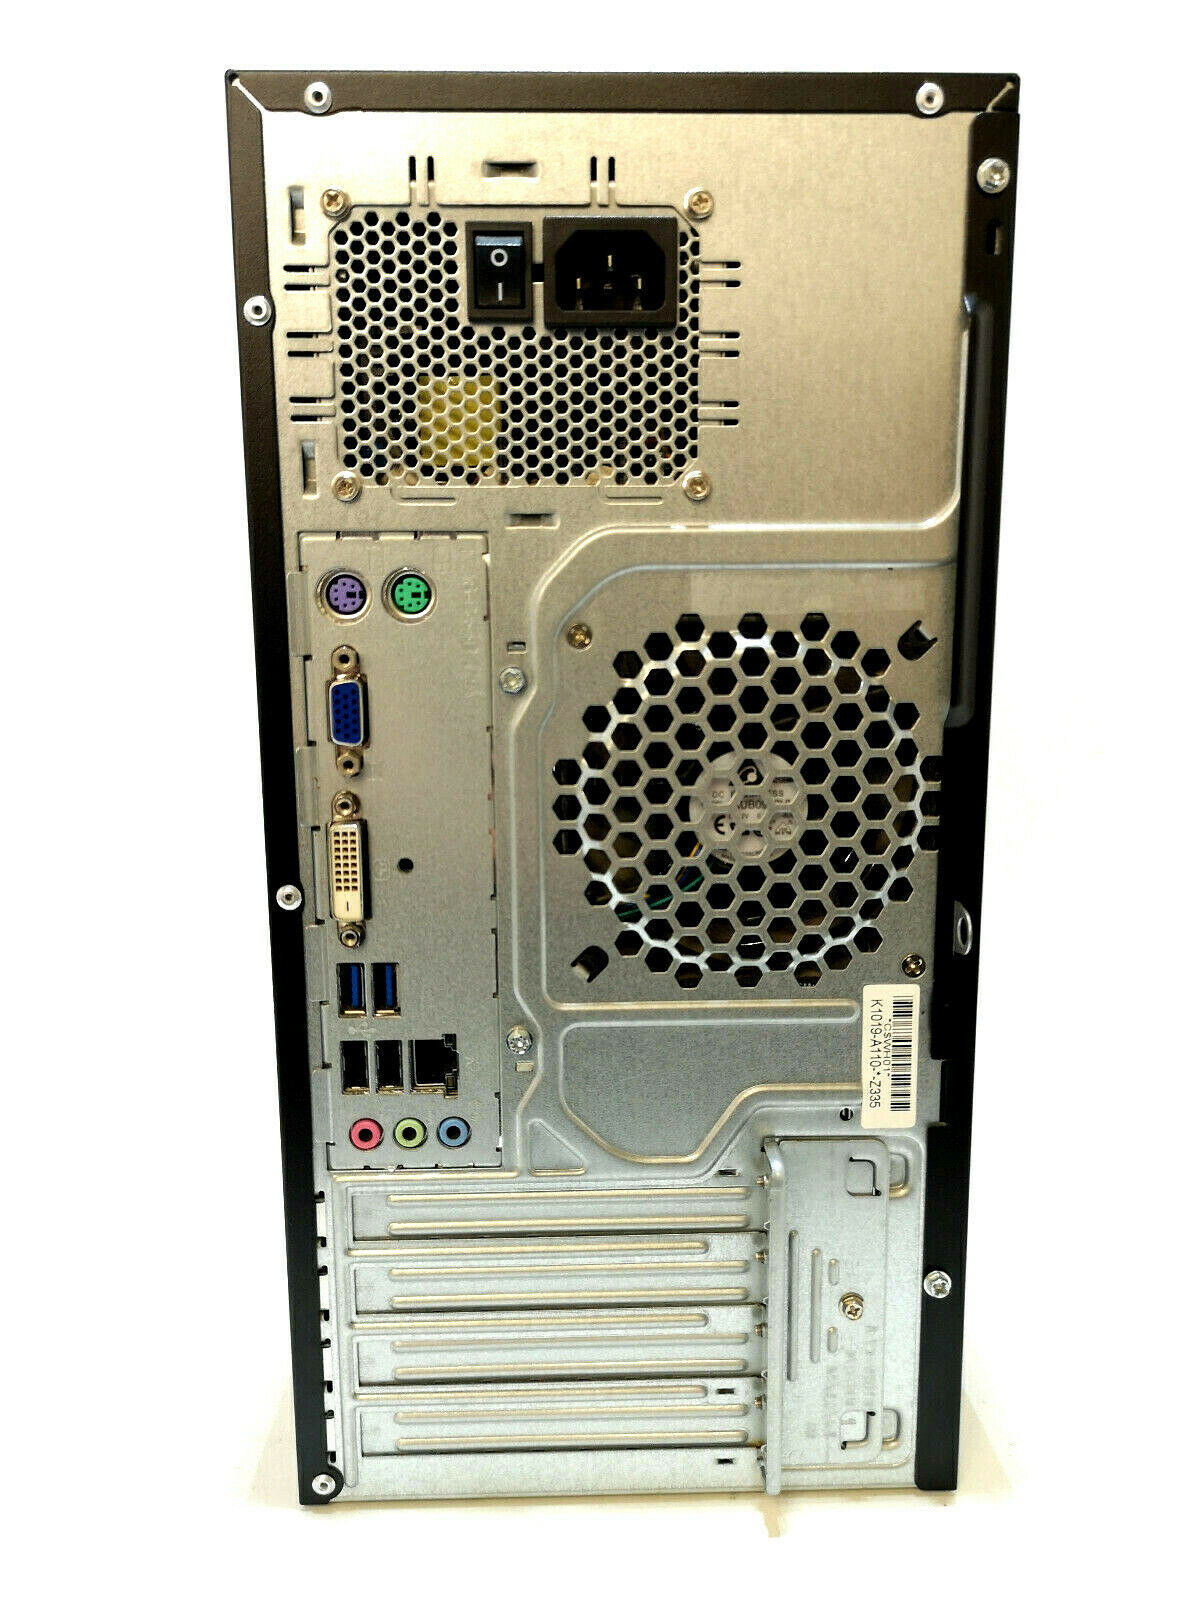 Refurbished Fujitsu Esprimo P420 Desktop Tower PC